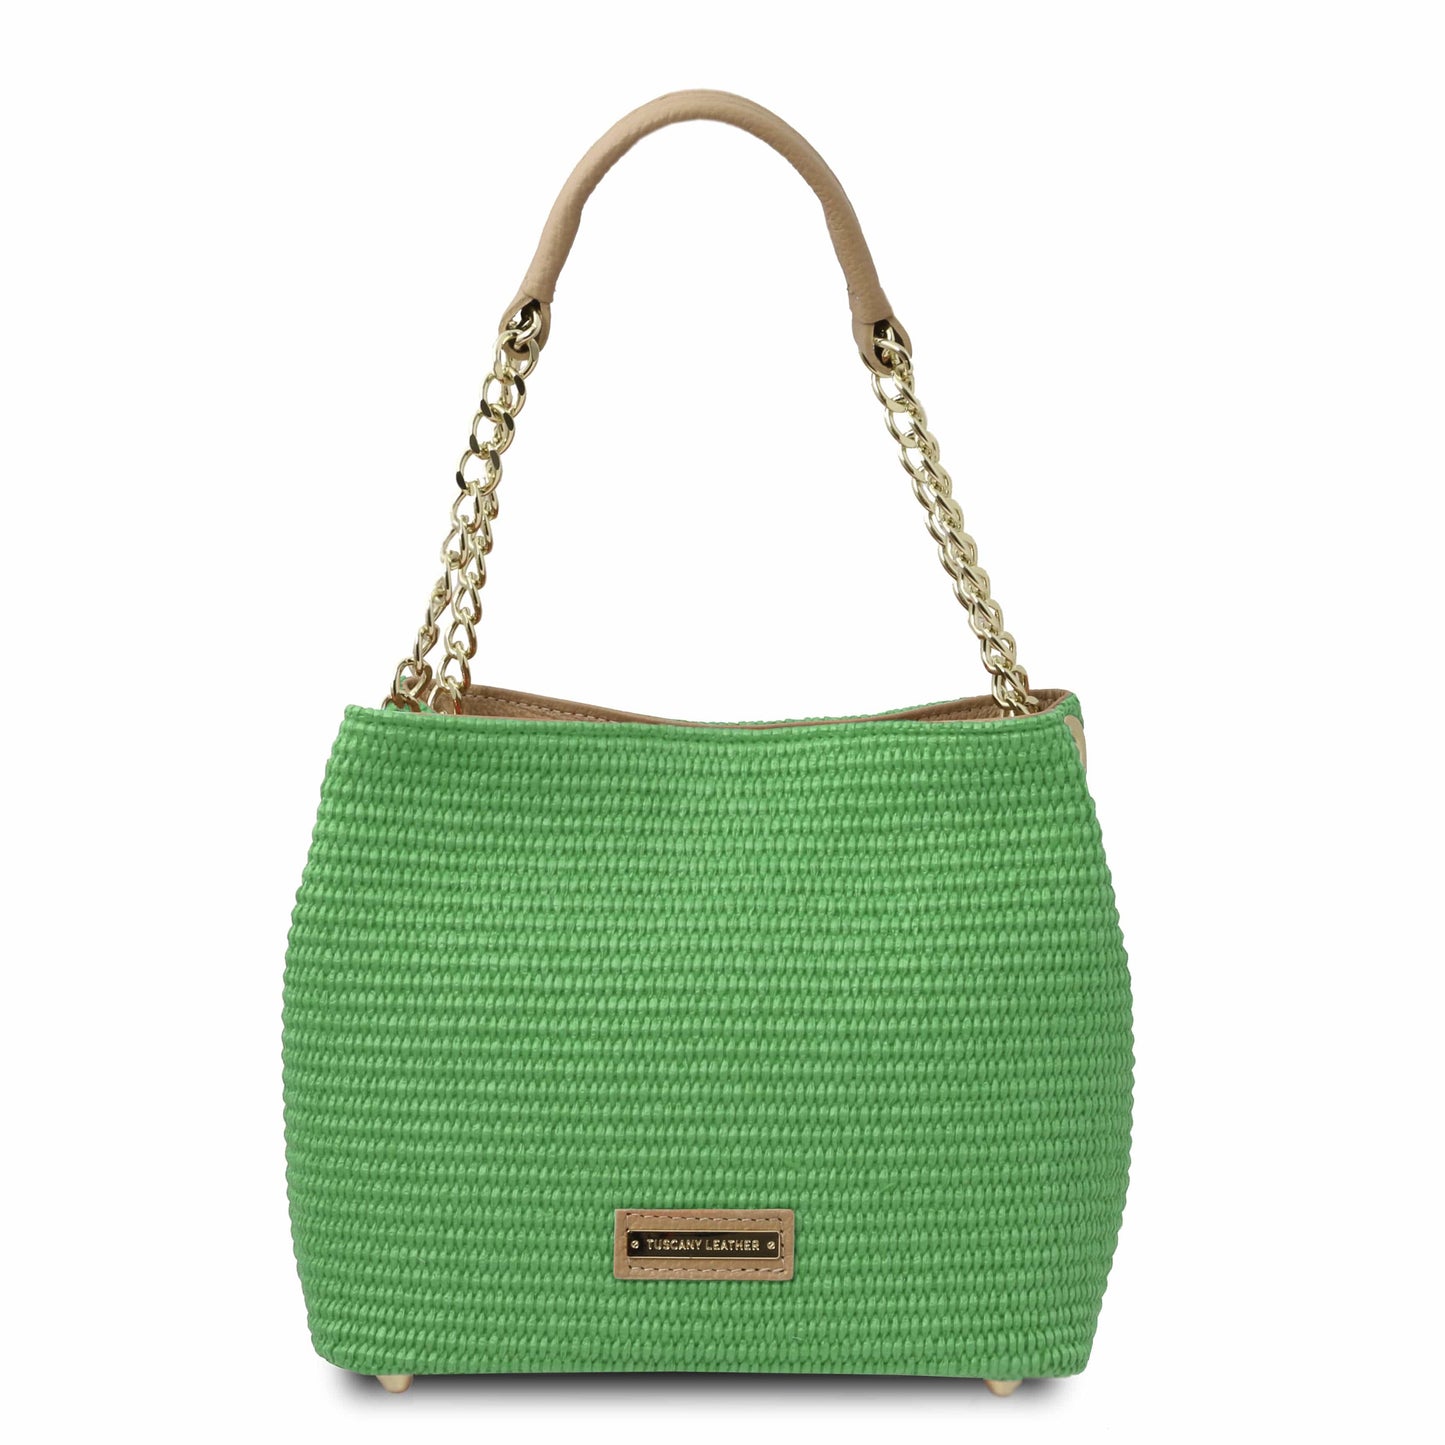 TL Bag - Straw effect bag | TL142208 - Premium Leather handbags - Just €95.16! Shop now at San Rocco Italia